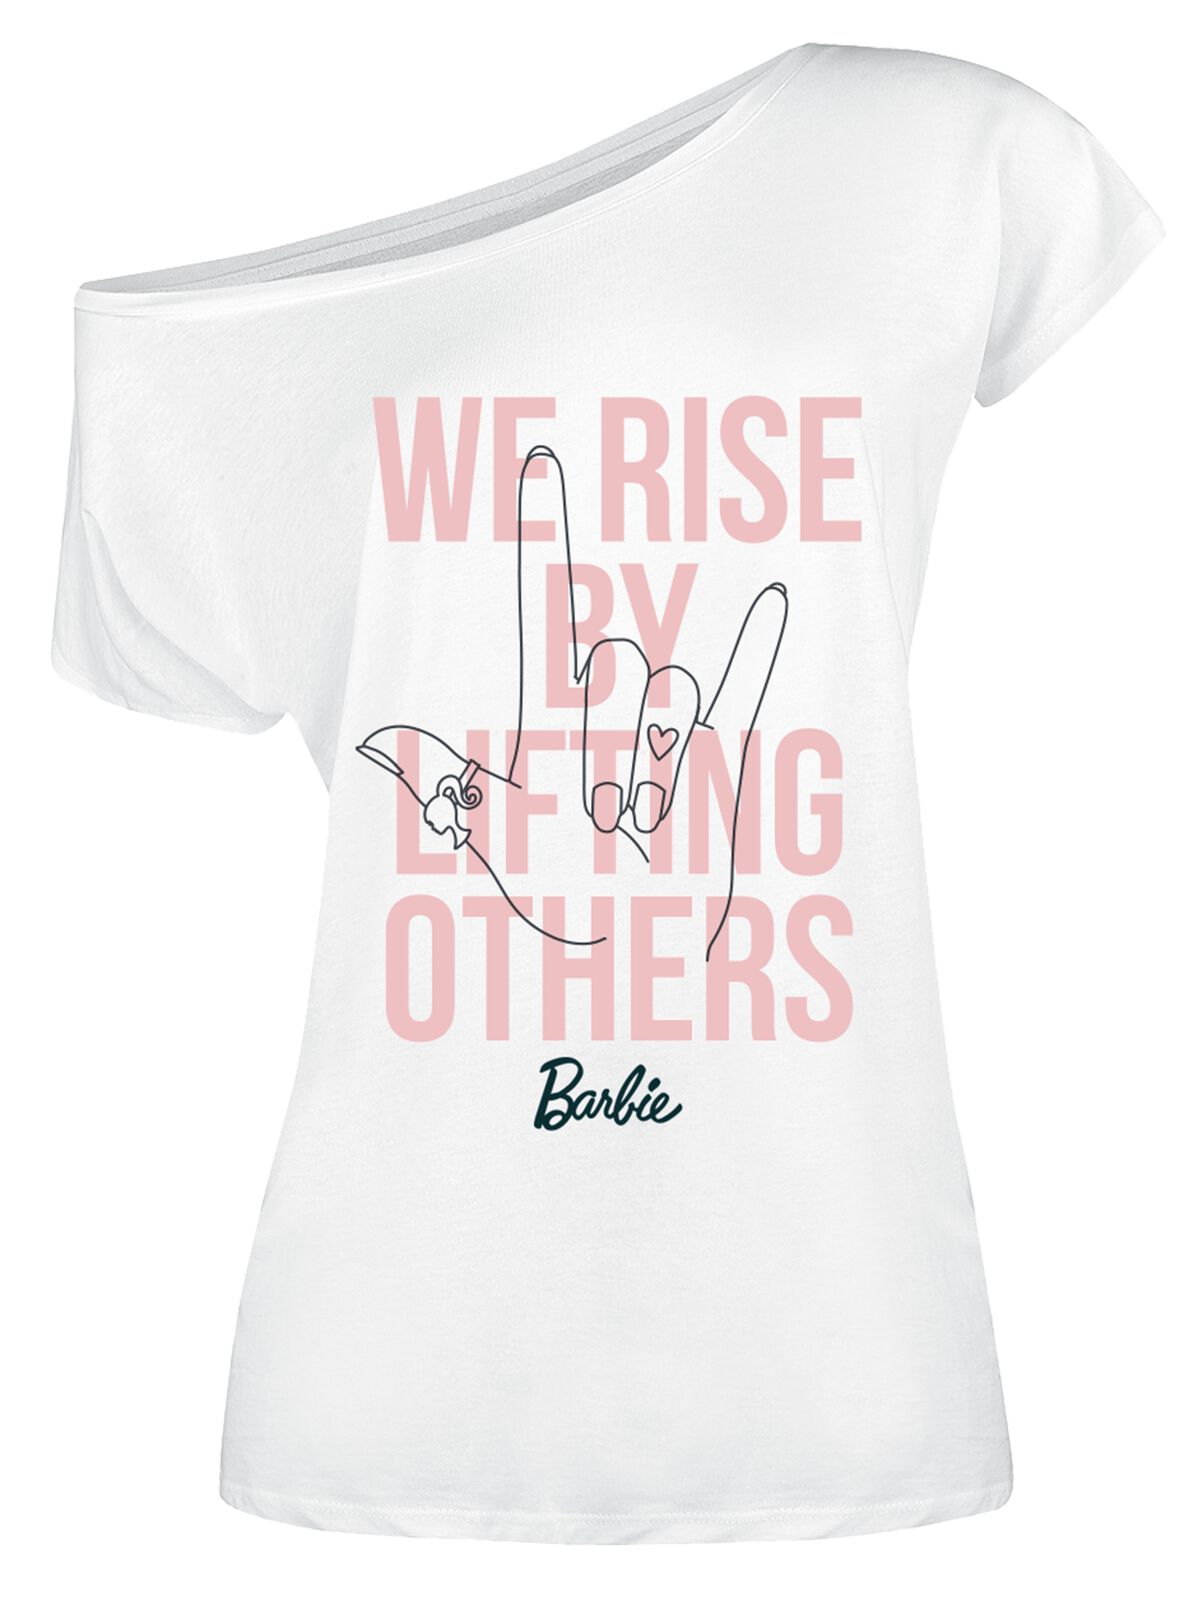 barbie t-shirt - we rise by lifting others - s bis xxl - fÃ¼r damen - grÃ¶ÃŸe xxl - - lizenzierter fanartikel weiÃŸ donna